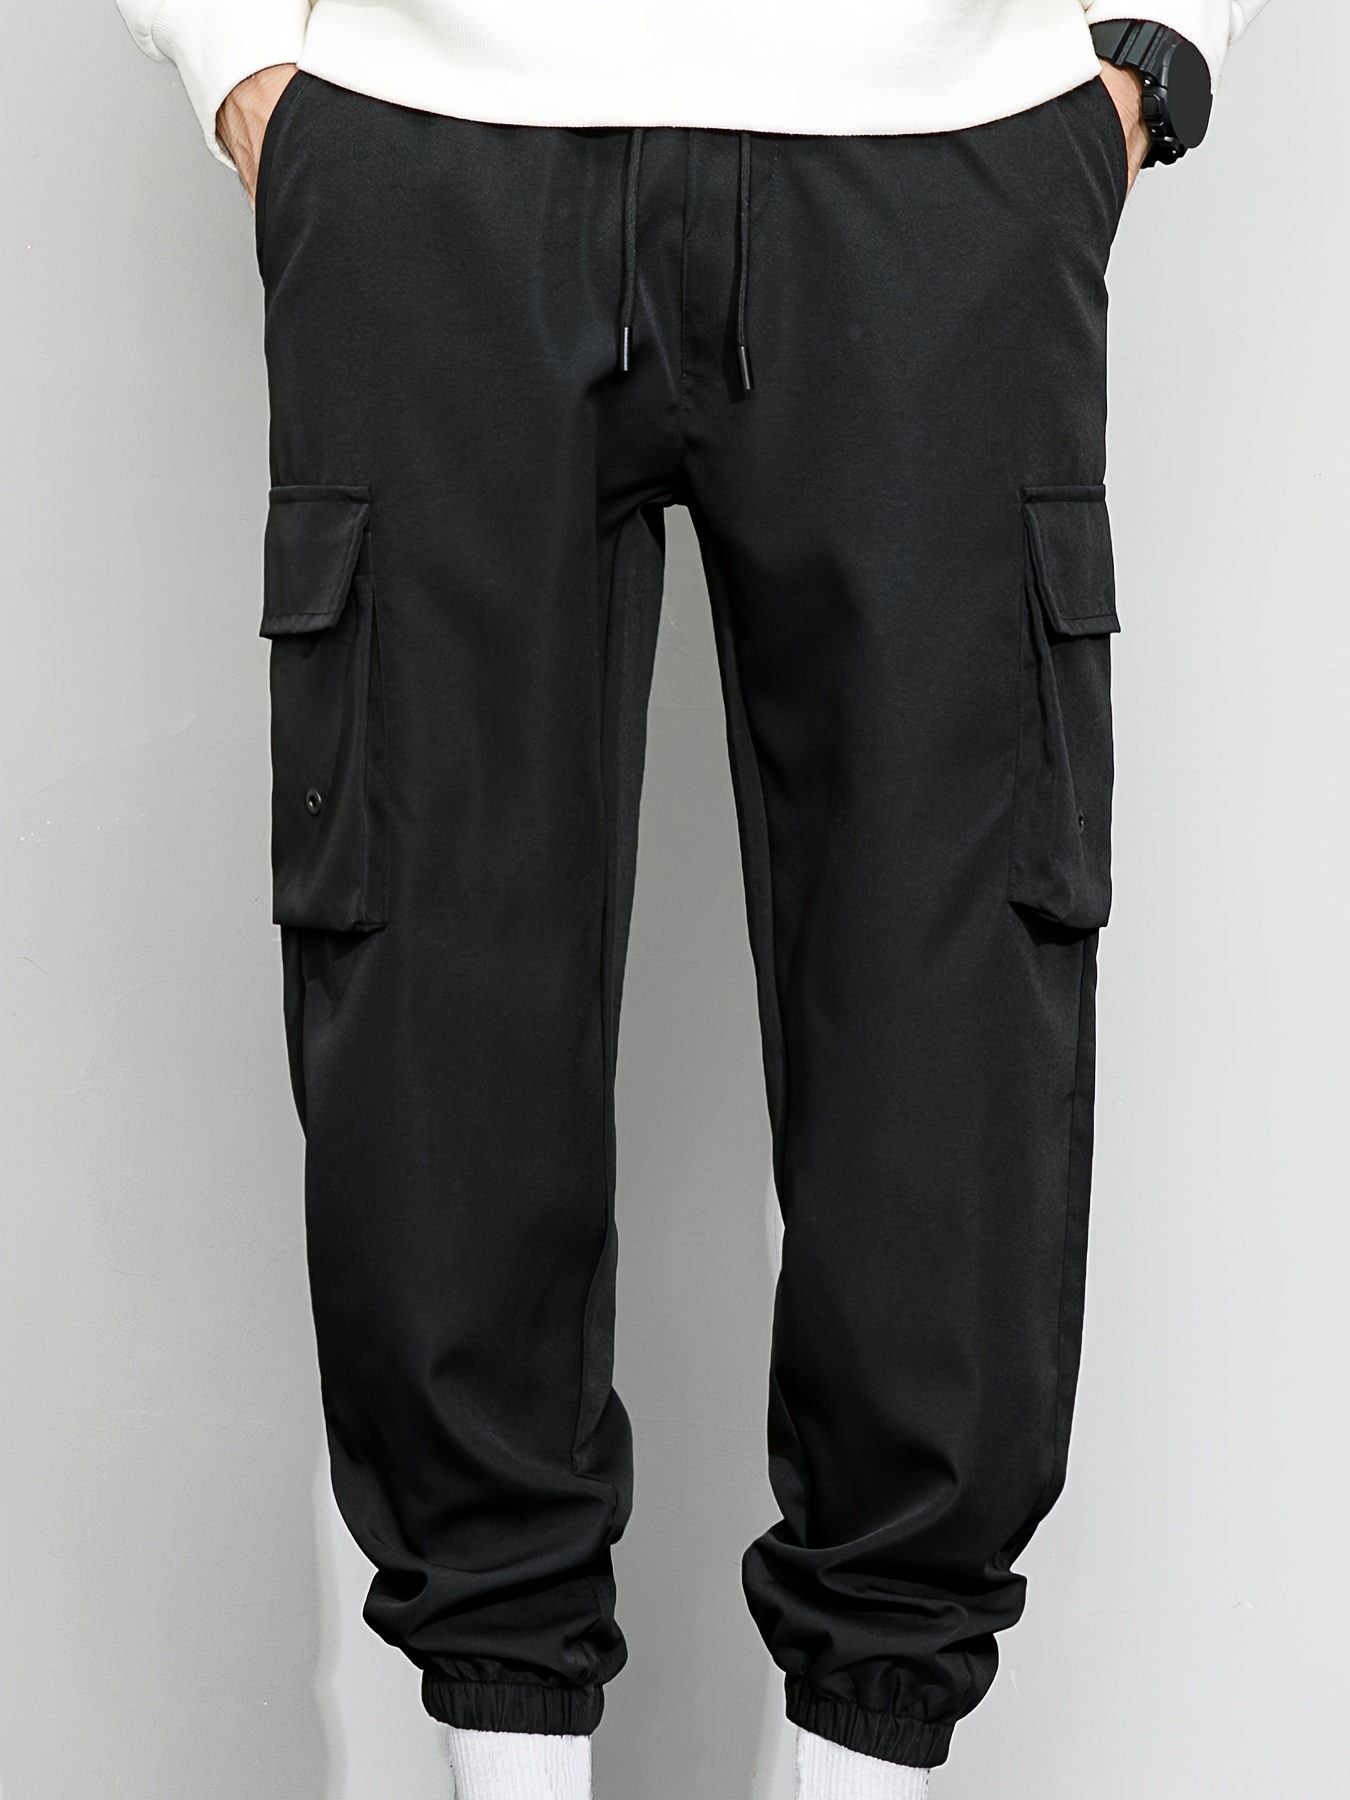 Side Pocket Cargo Pants Trousers Fashion Slim Fit Stretchy Men